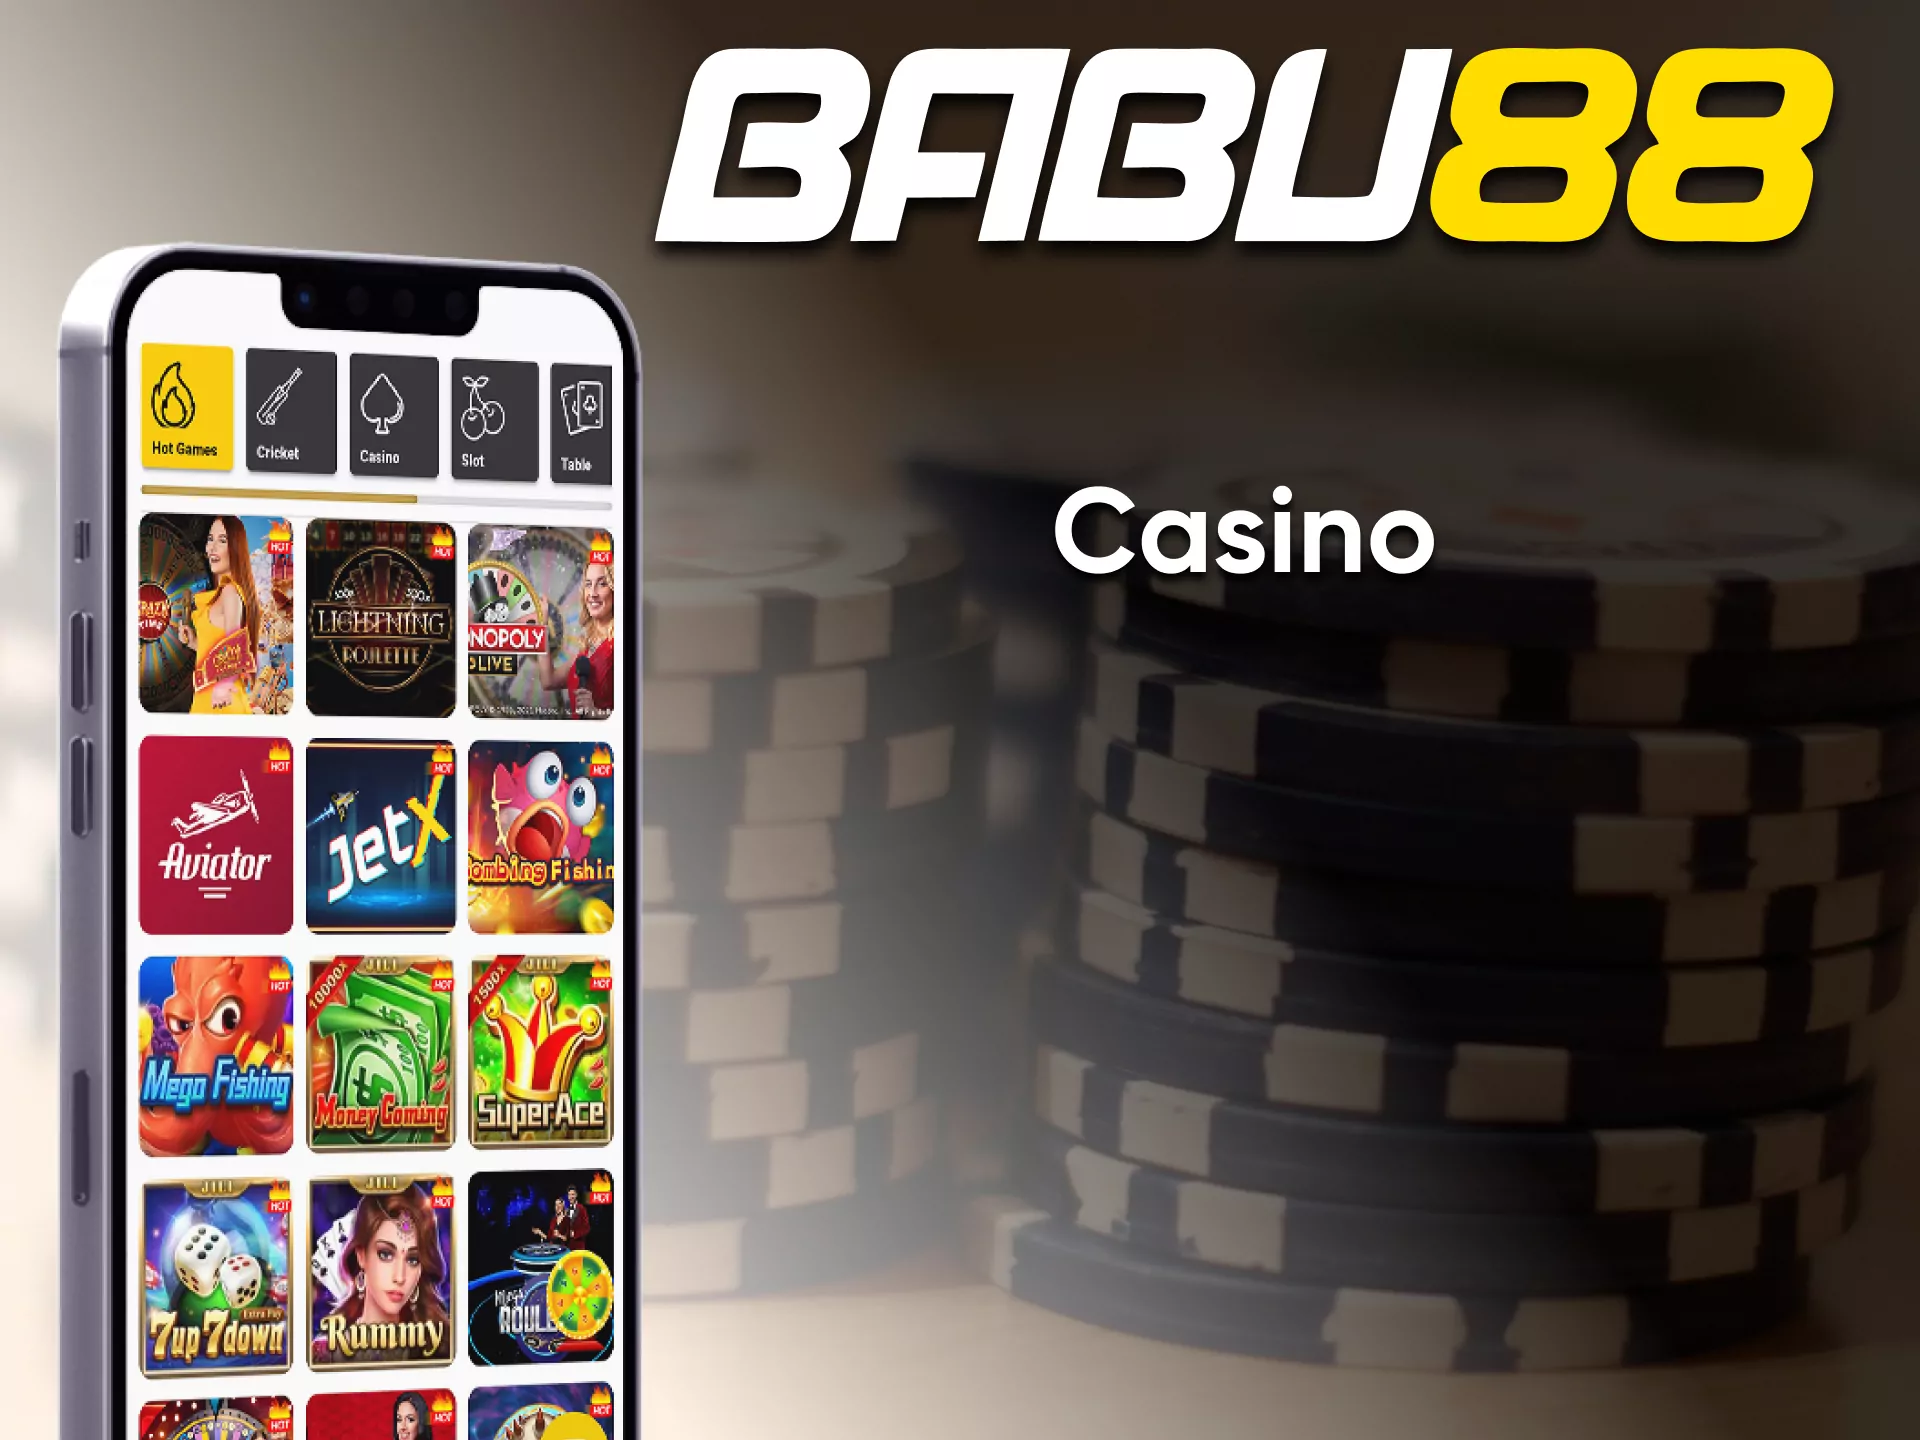 You can gamble in the Babu88 app.